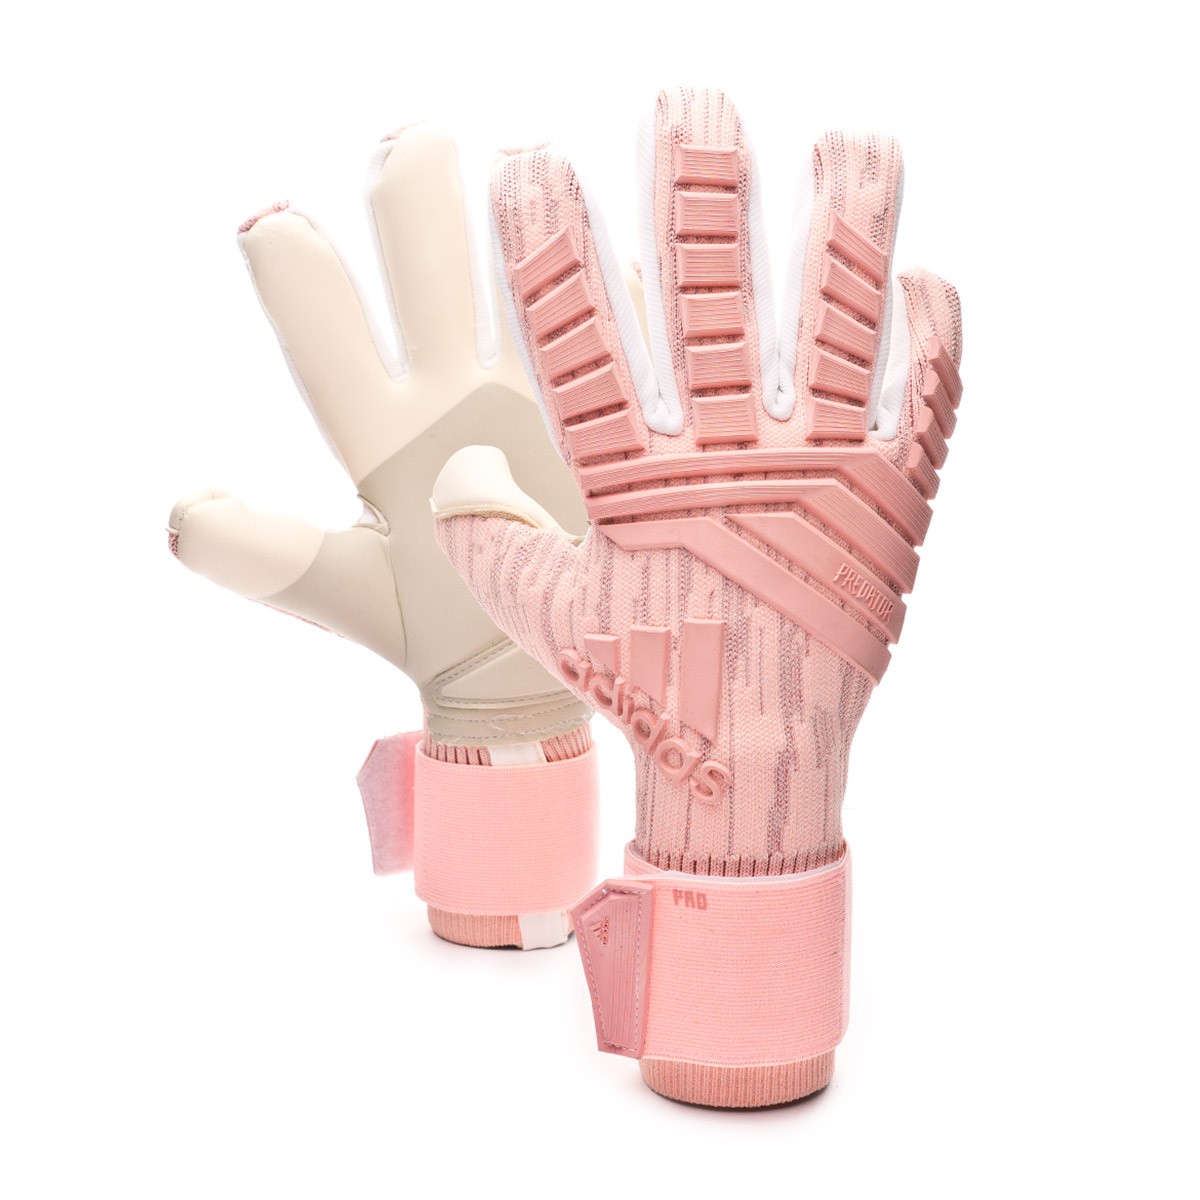 pink adidas football gloves